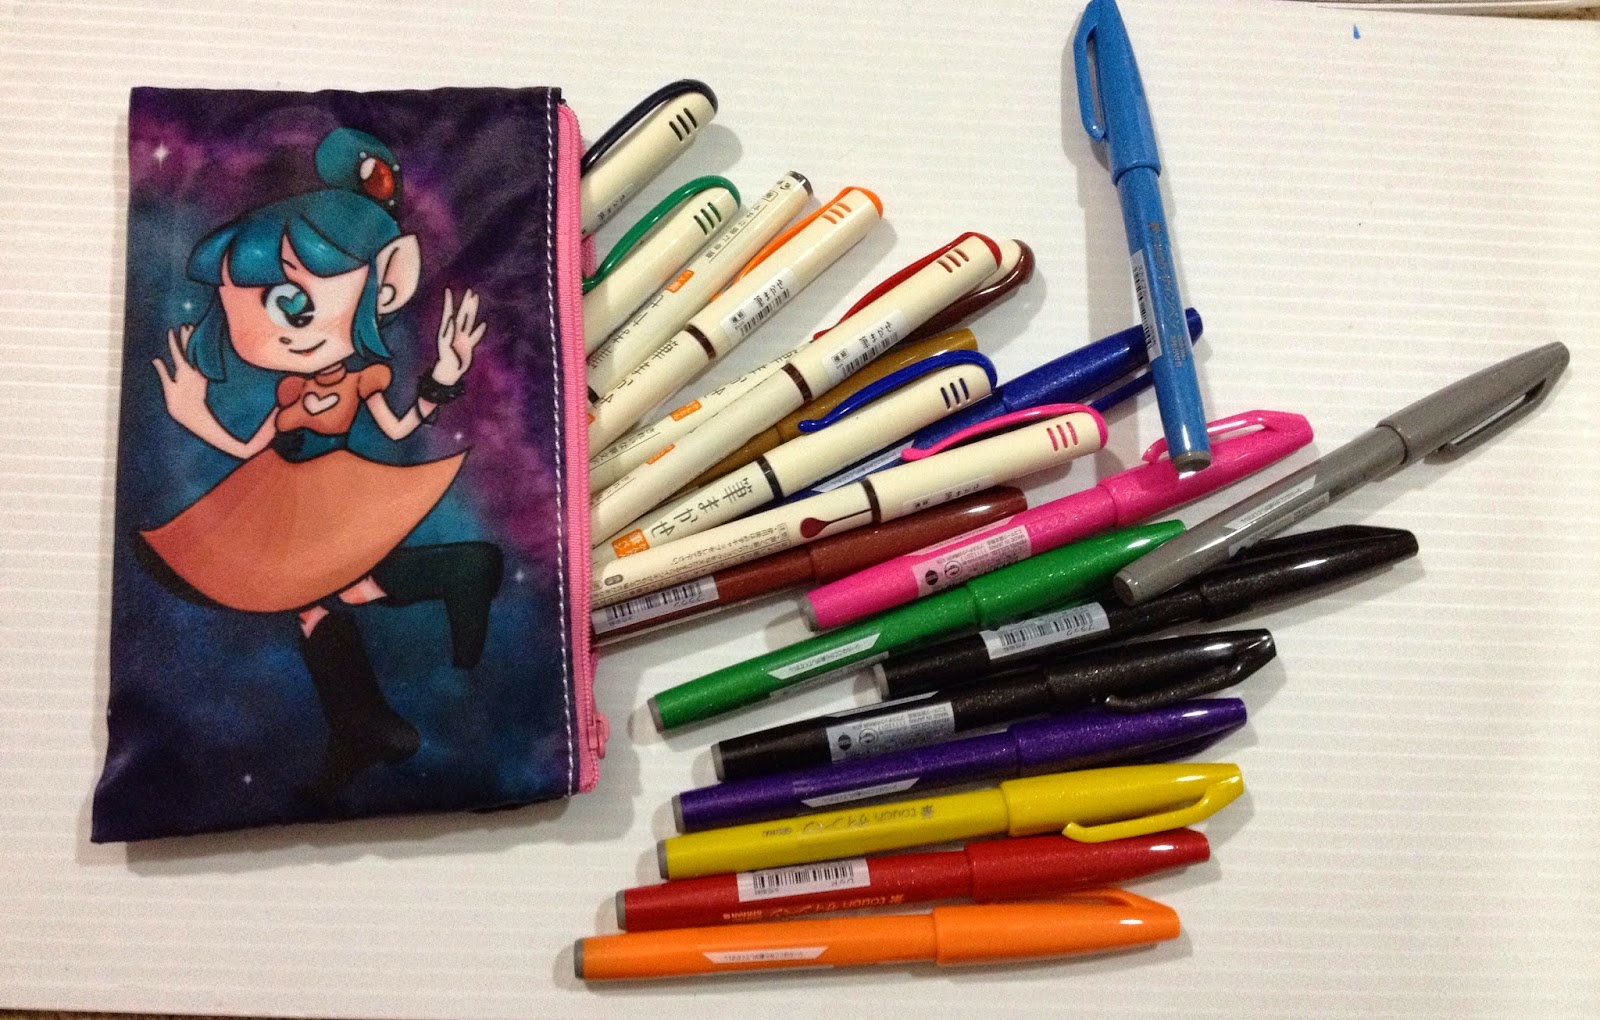 Drawing Pens, Black Multiliner, 12 Pack, Anime Pens, India